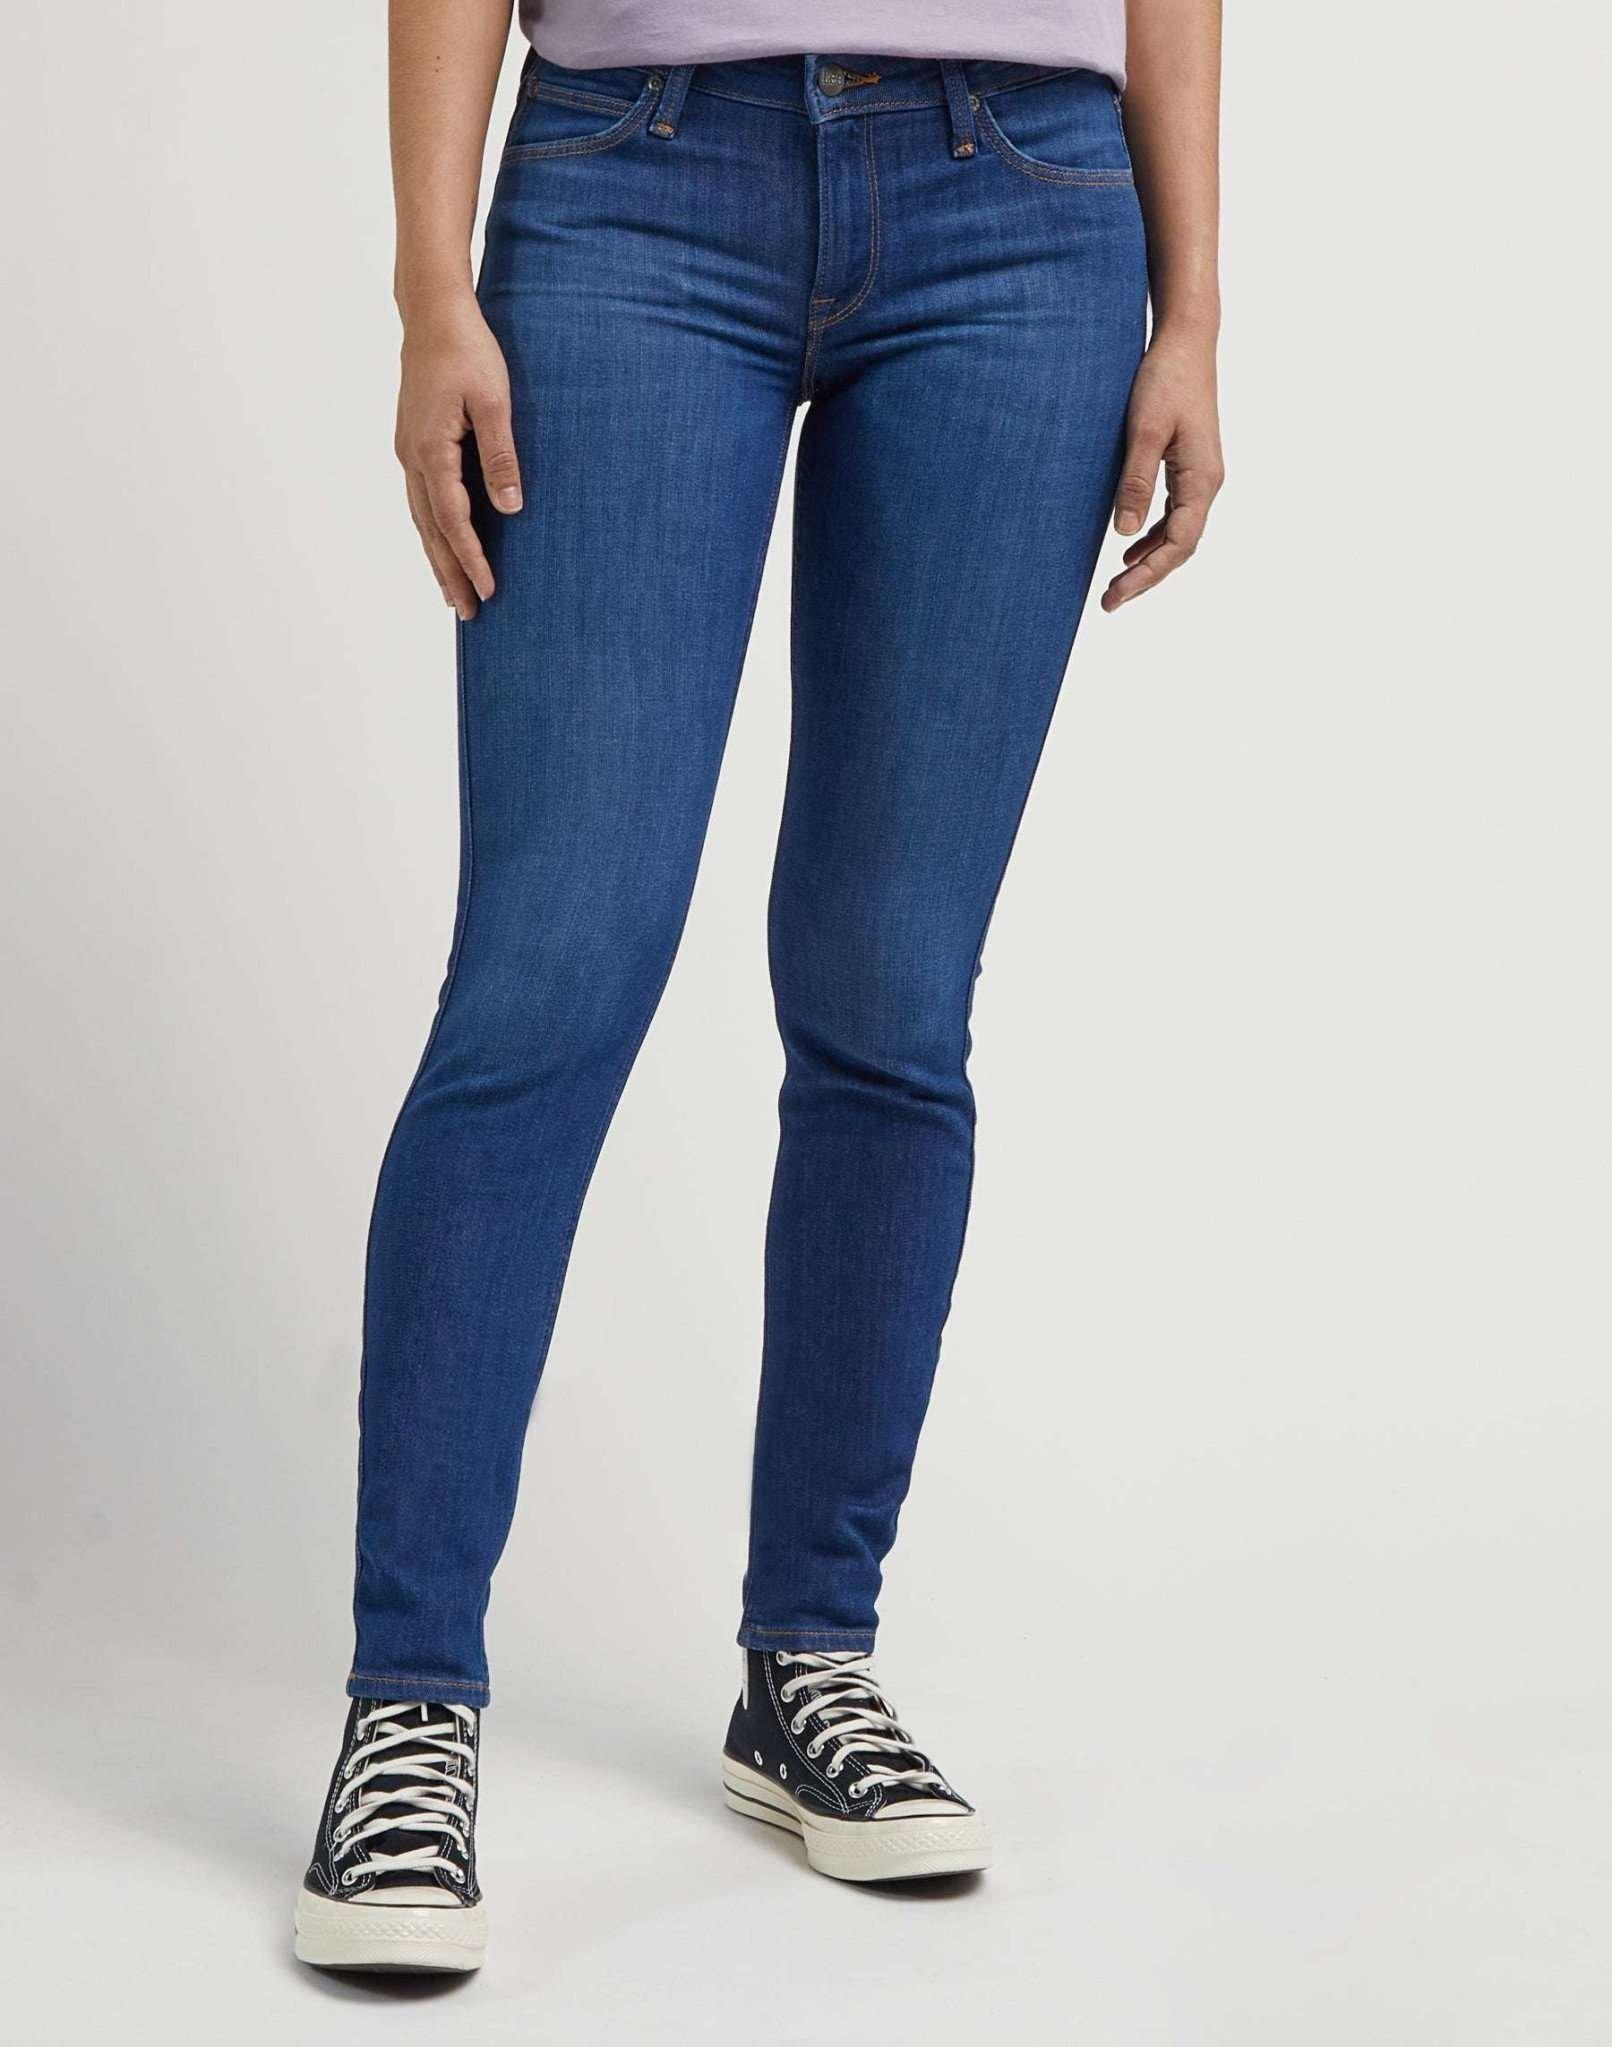 Jeans Skinny Fit Scarlett Damen Blau L31/W31 von Lee